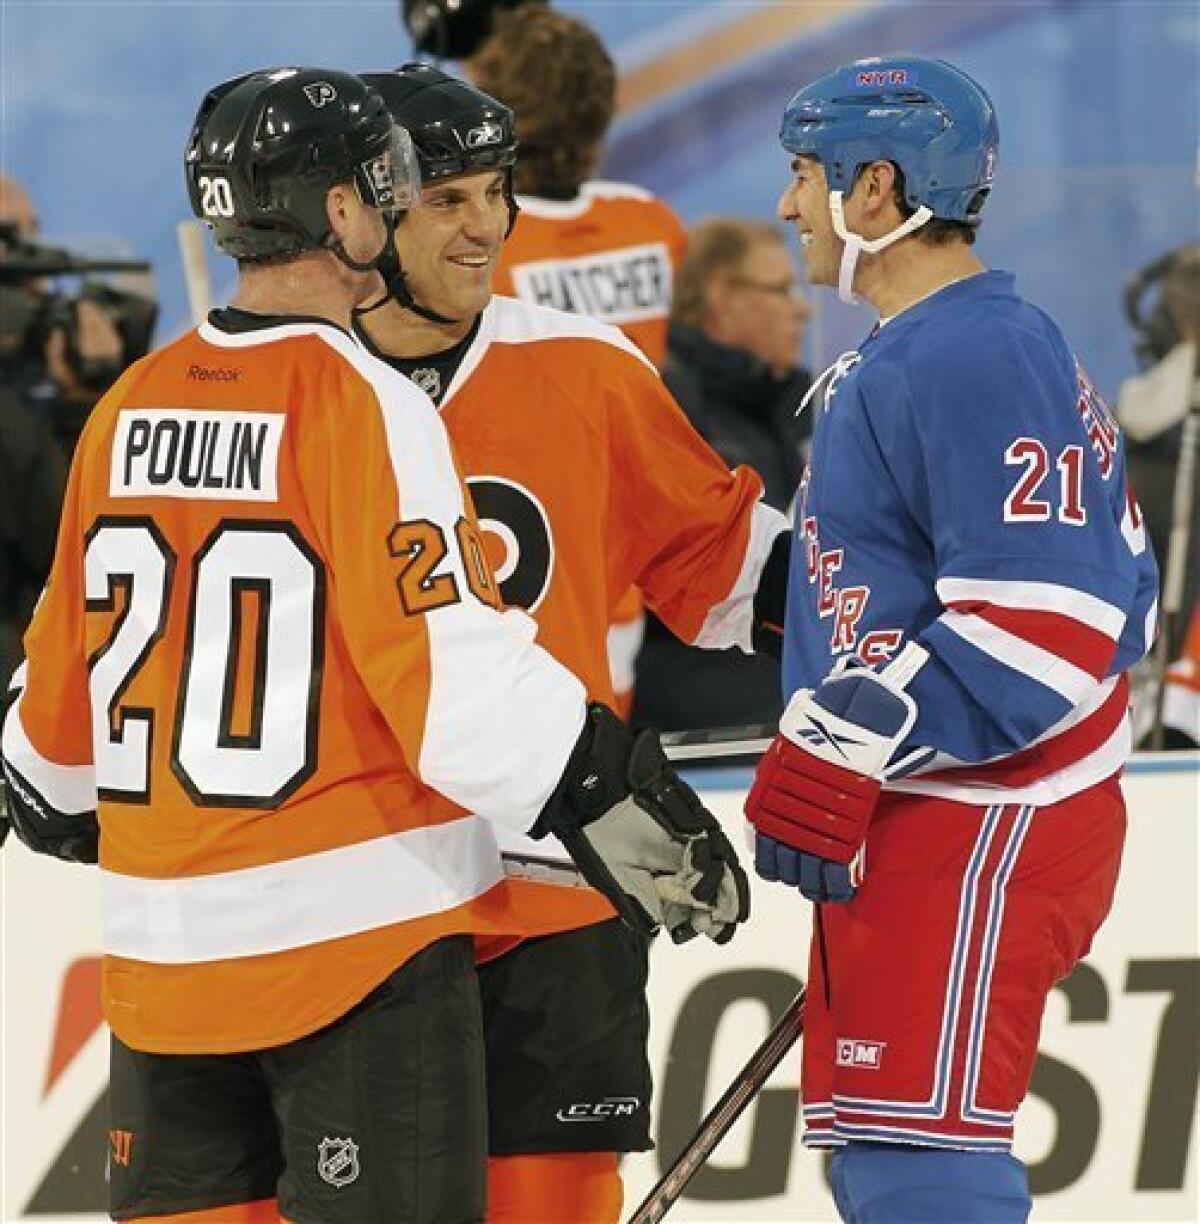 December 31, 2011: Flyers Alumni star at Citizens Bank Park